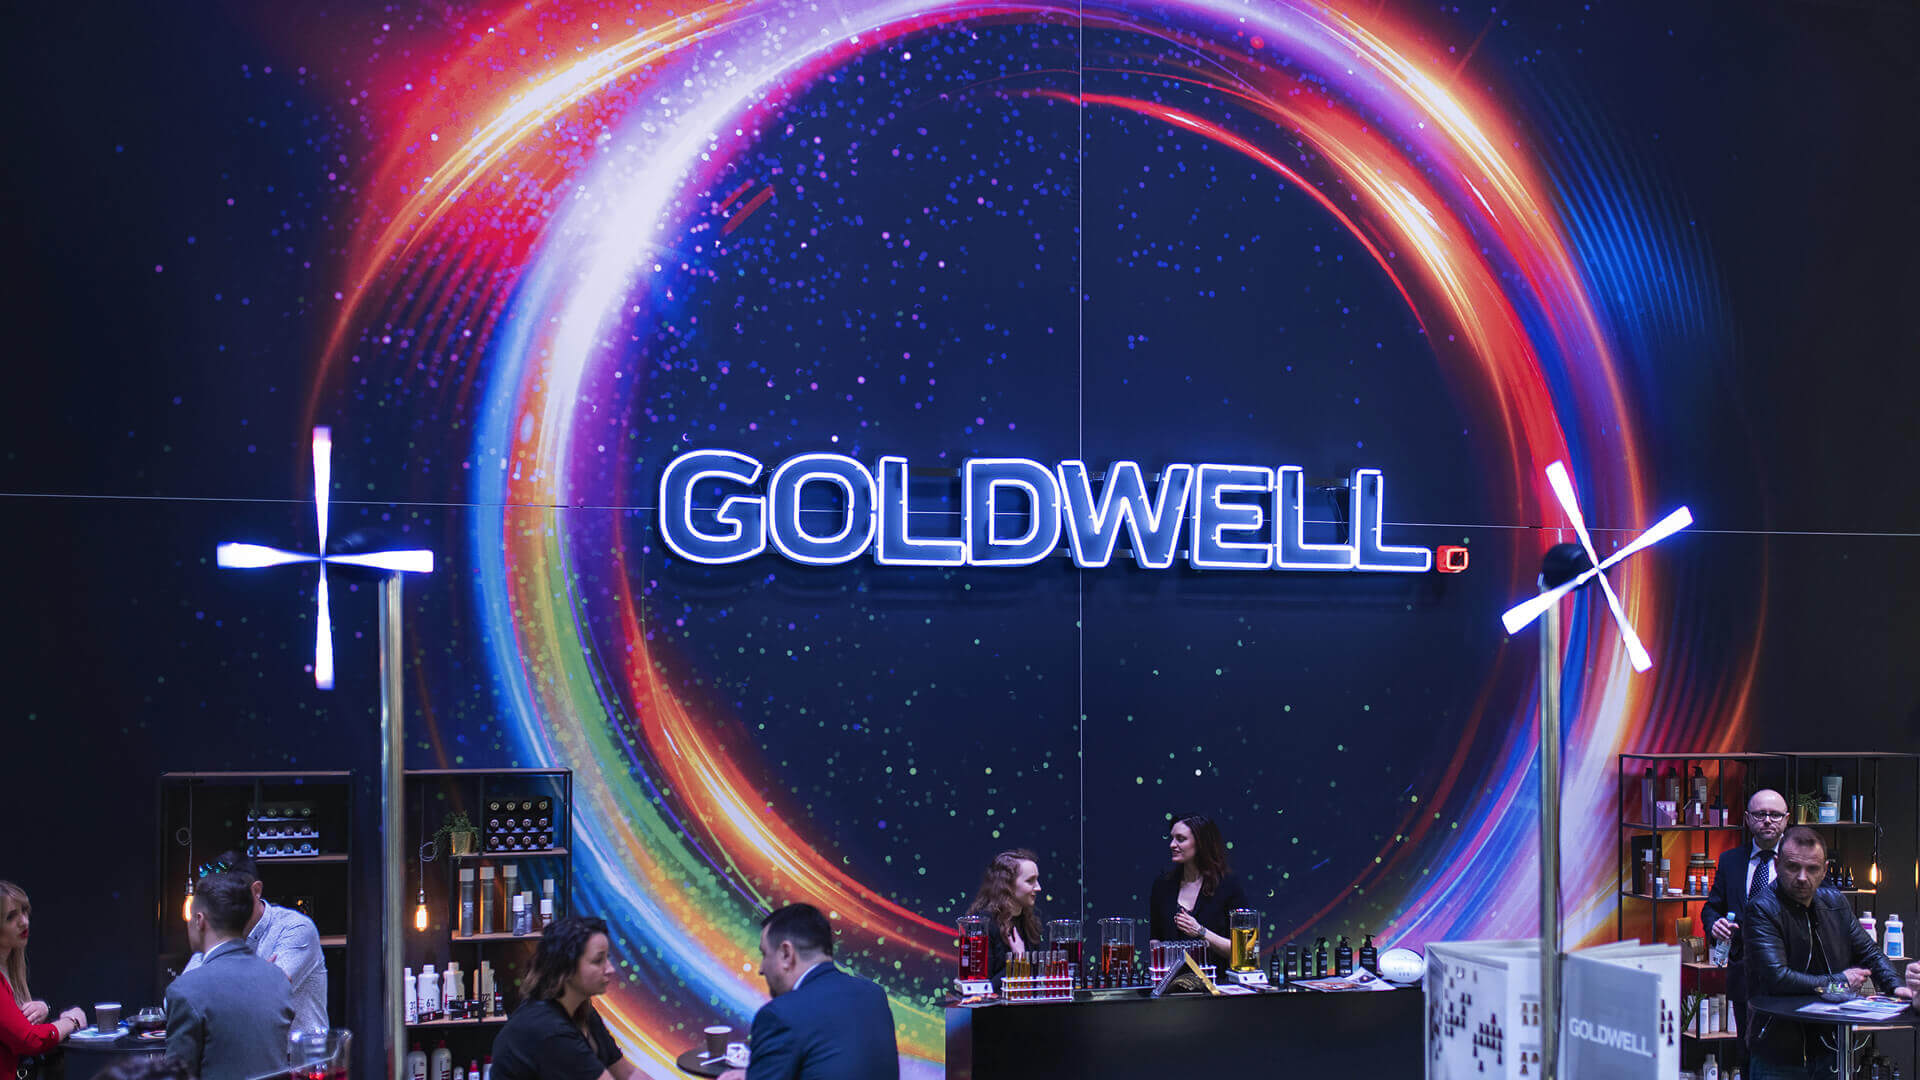 Goldwell goldwel - slider-neones-poznan-goldwell-target-neones-poznan-carta-neón-en-la-pared-neón-color-en-cinta